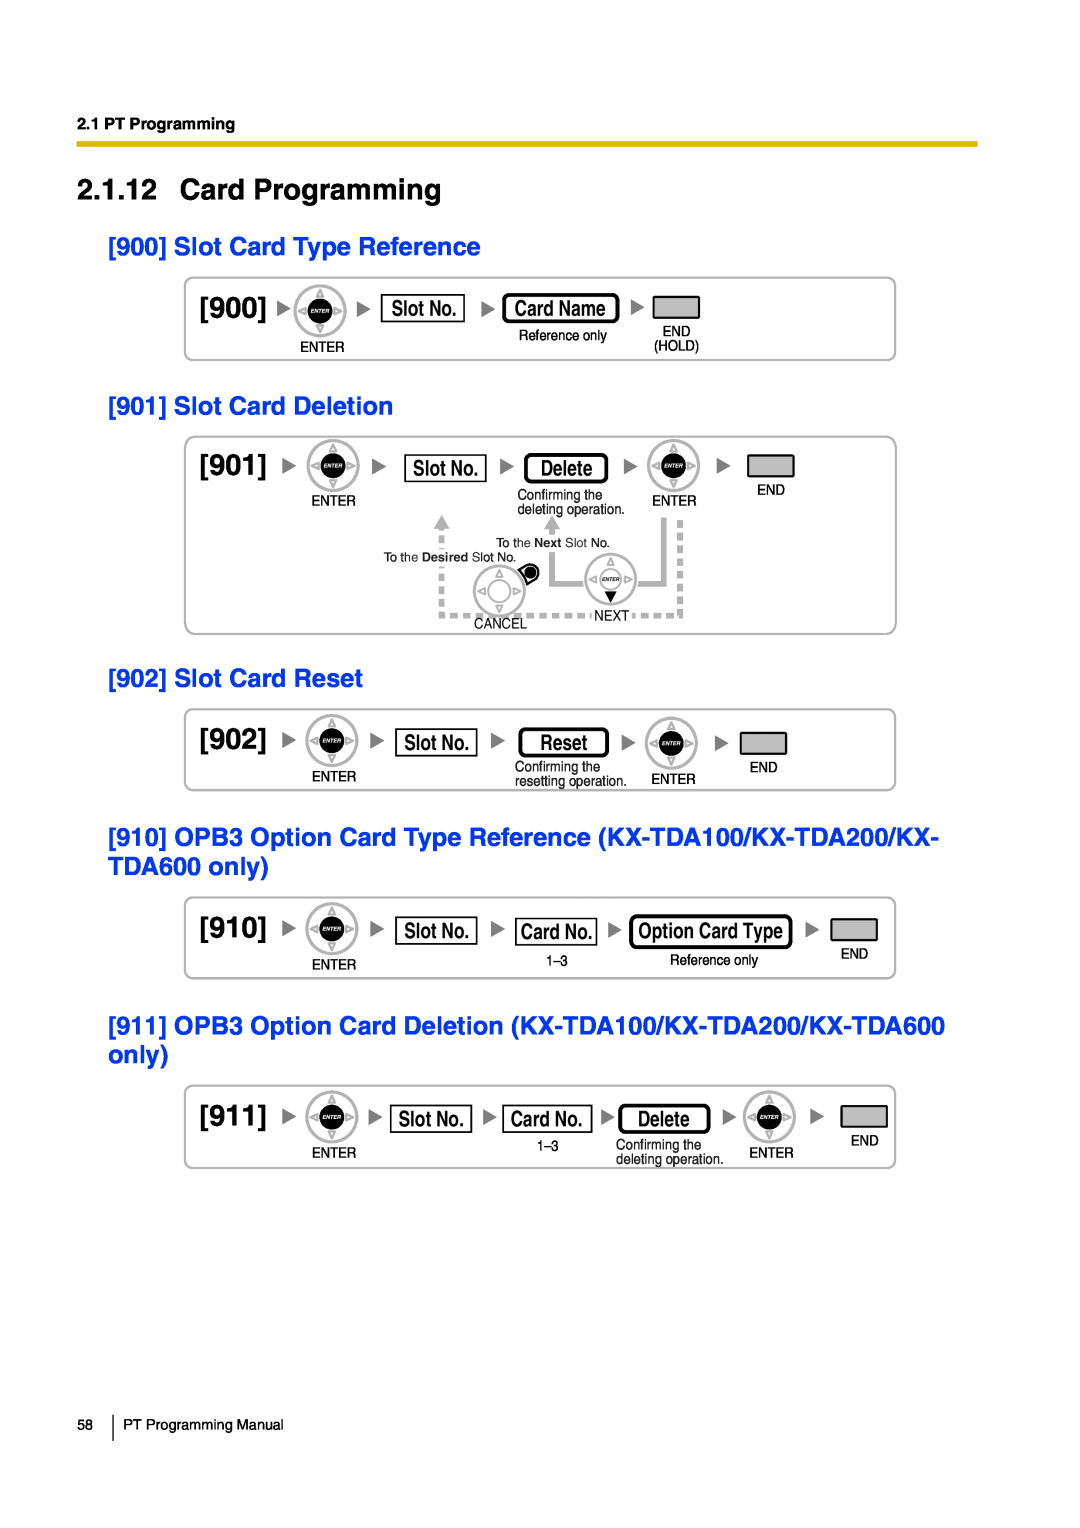 Panasonic KX-TDA30 manual 2.1.12Card Programming, 900Slot Card Type Reference, 901Slot Card Deletion, Slot Card Reset, only 